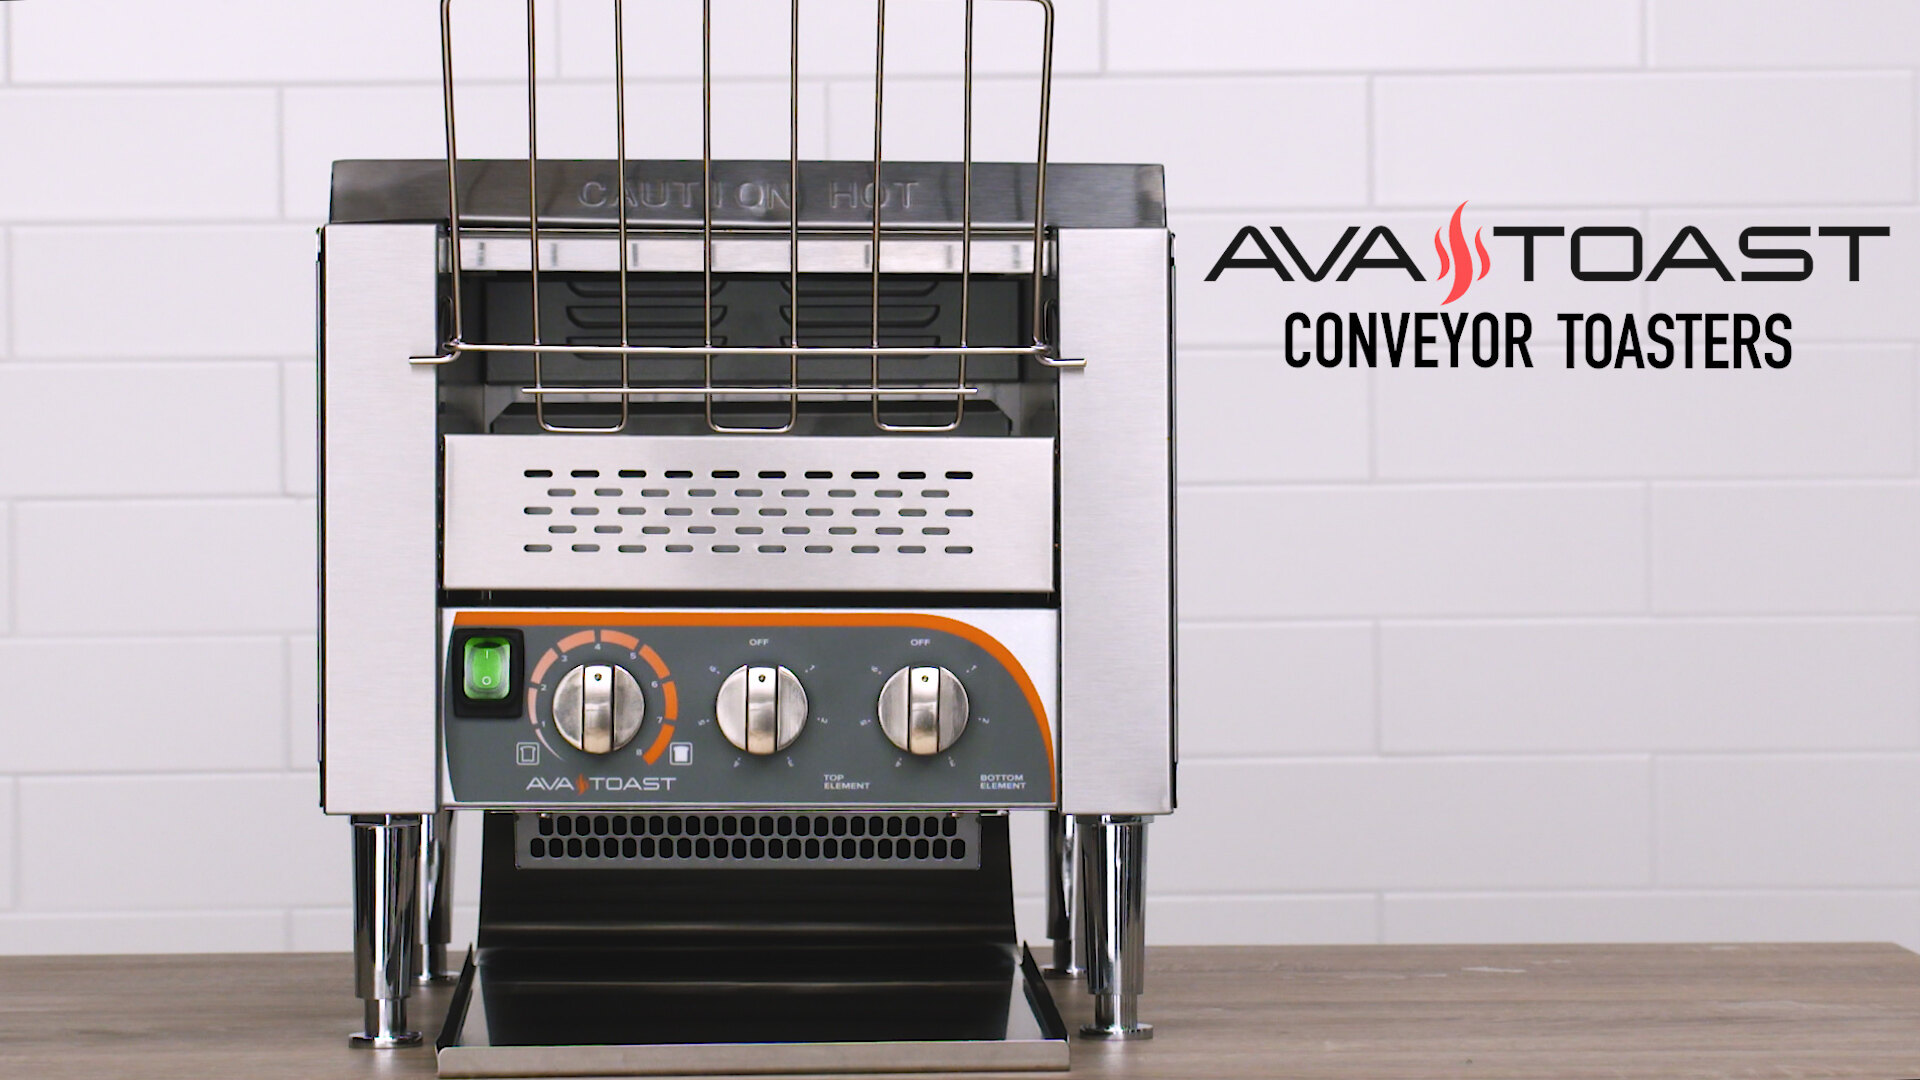 Avatoast PTBELT Conveyor Belt fit T3600 Conveyor Toasters 